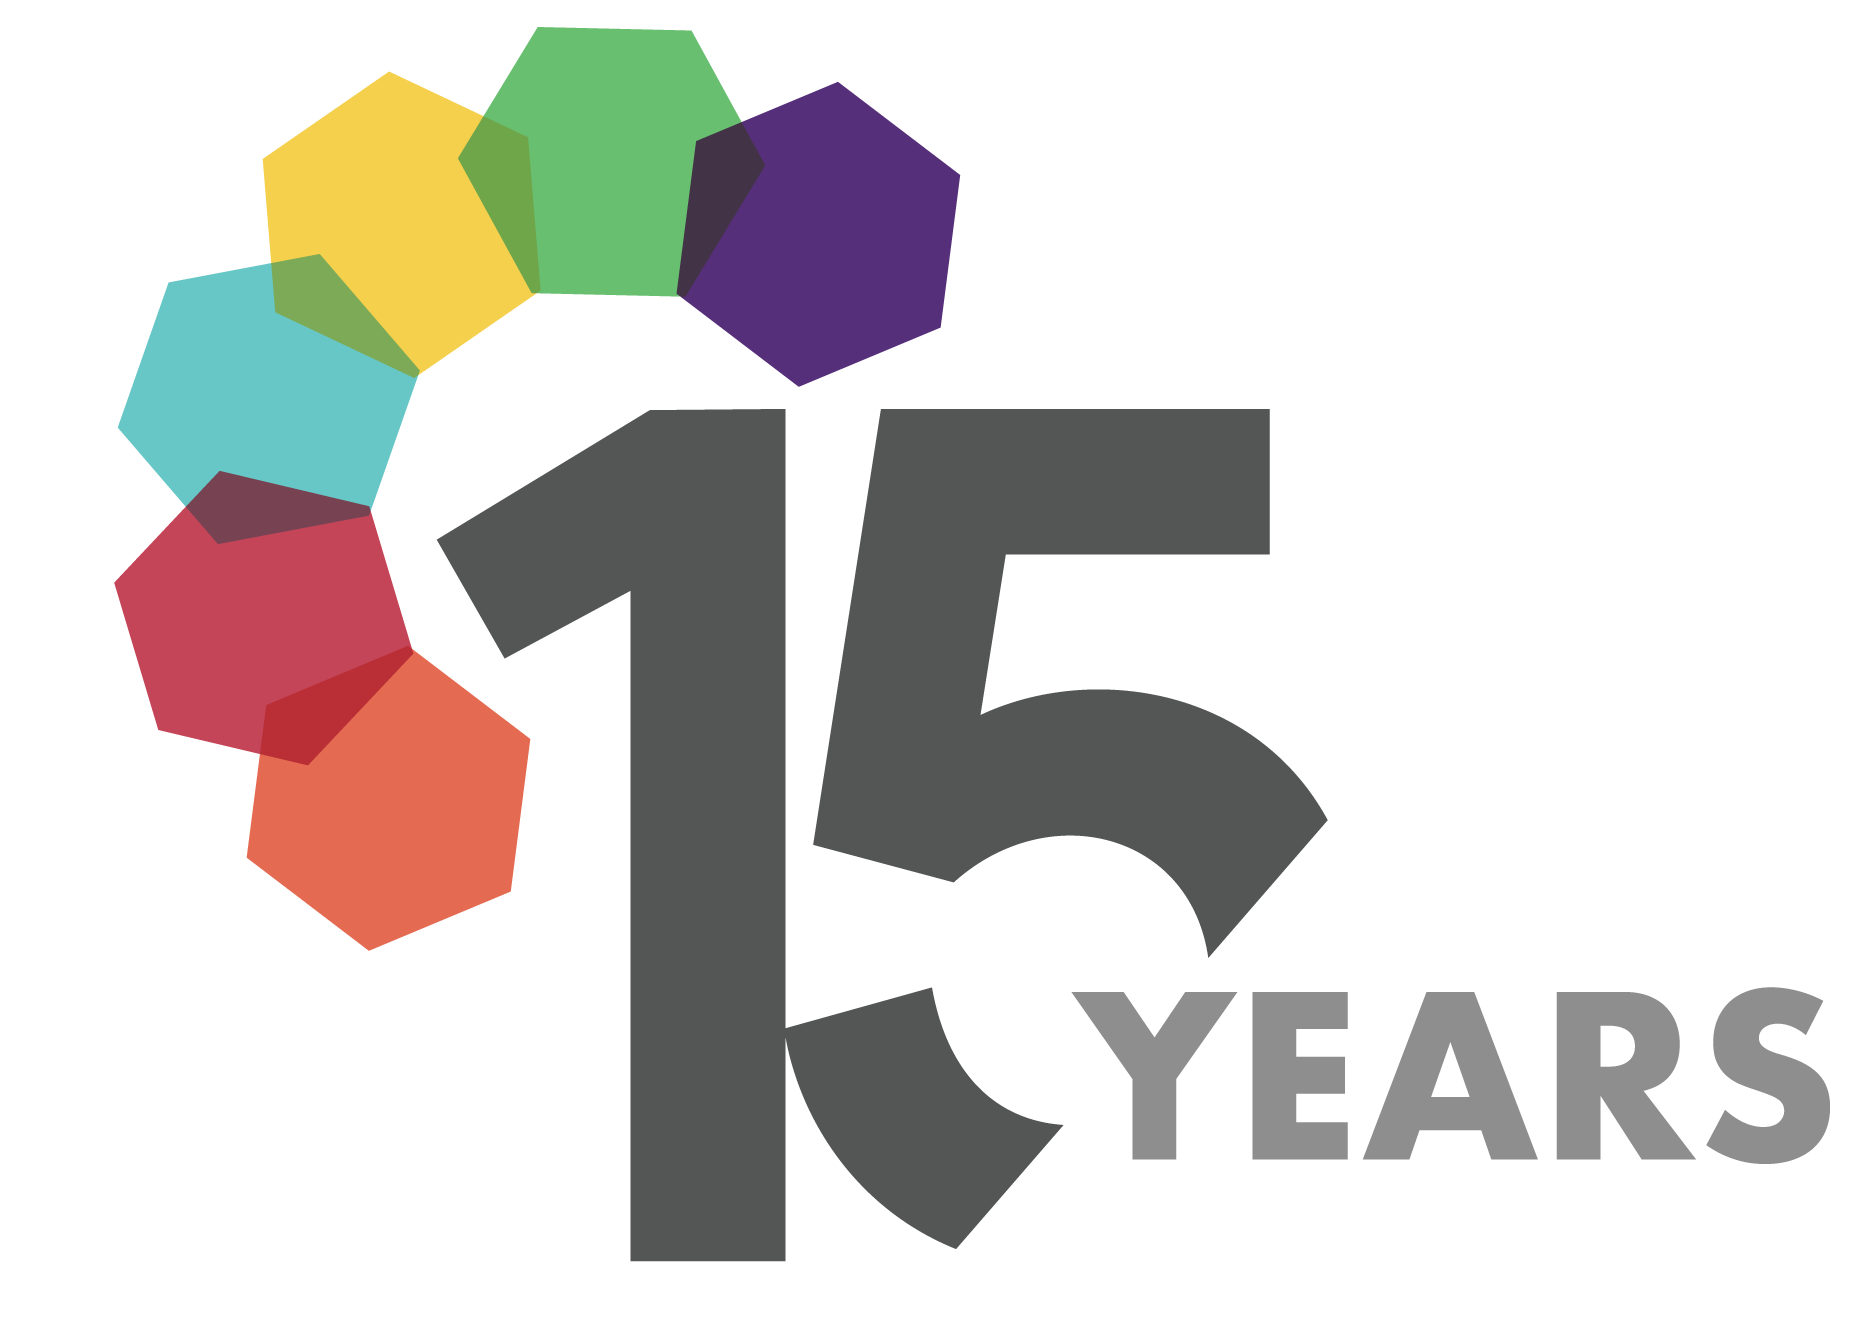 15 years anniversary logo set 15th Royalty Free Vector Image